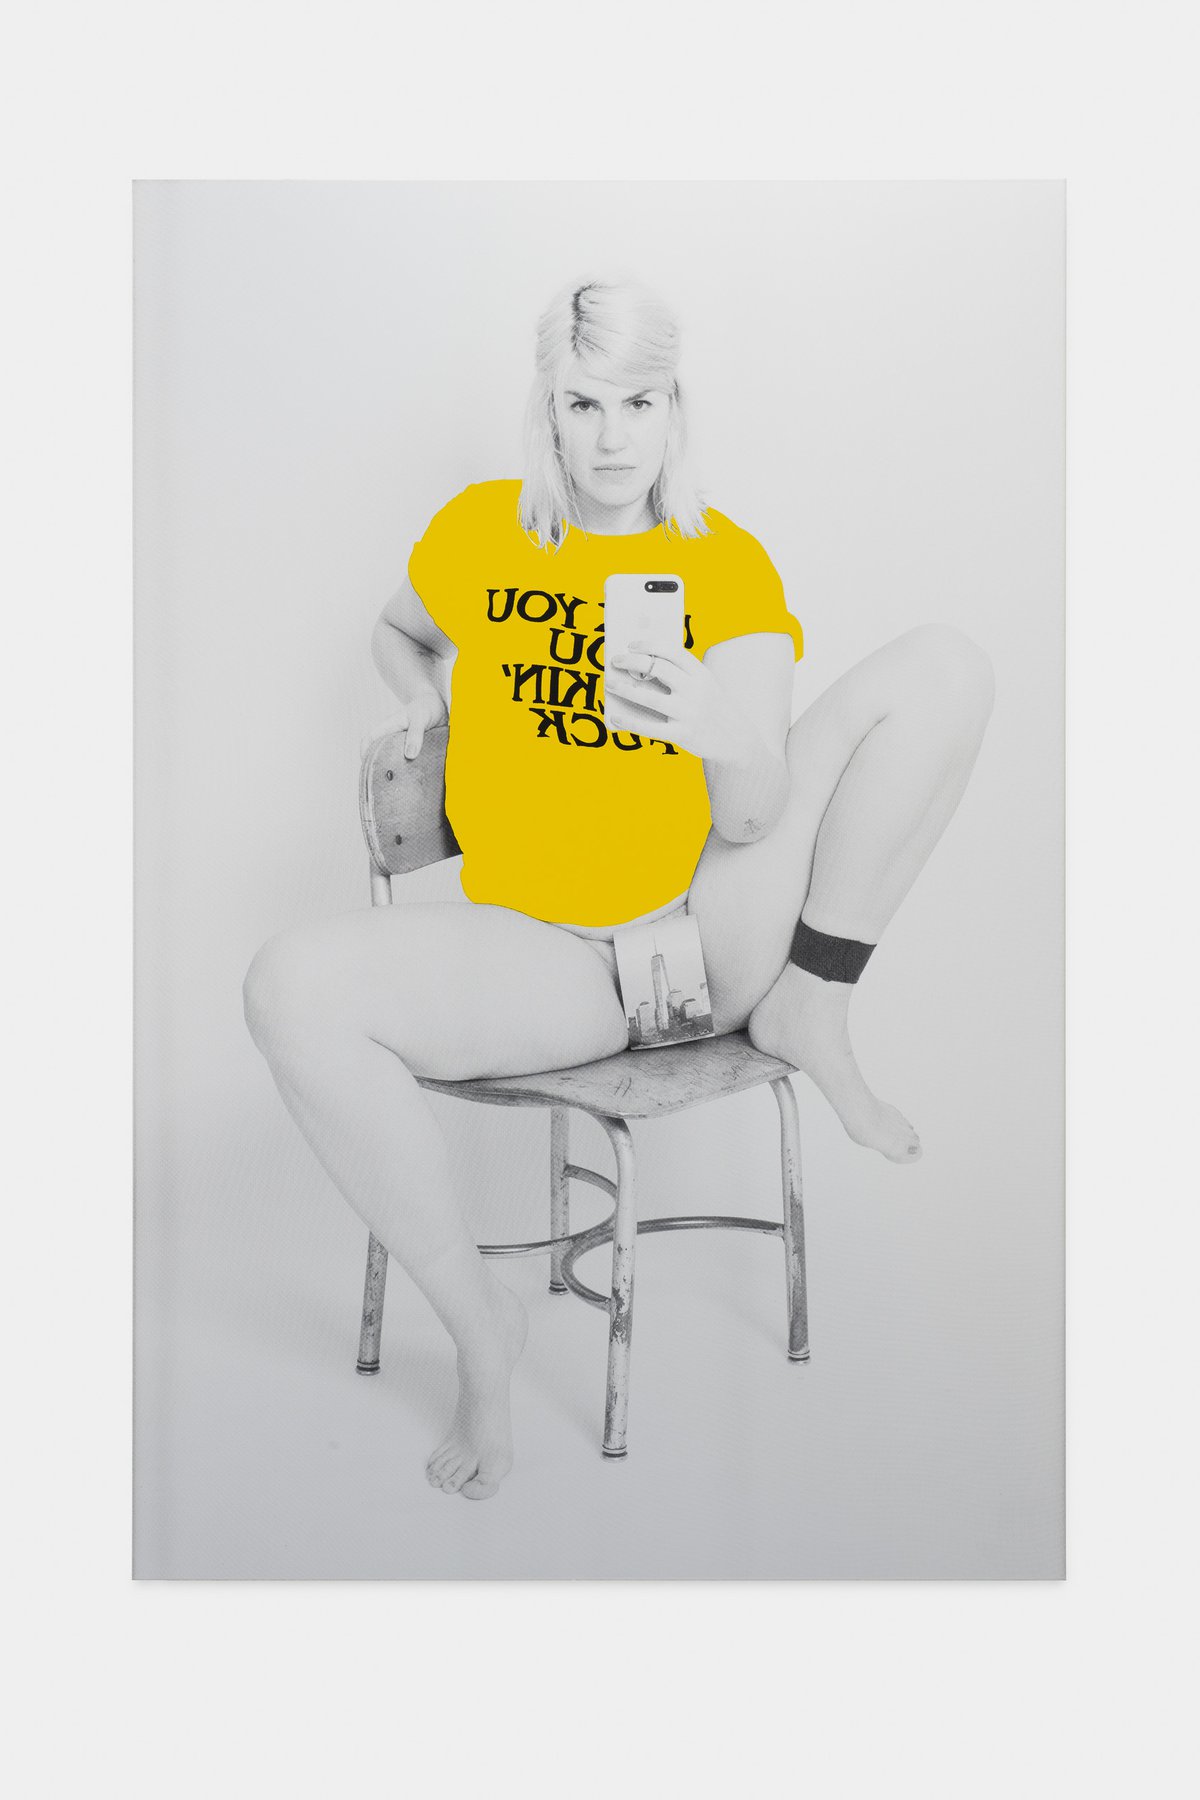 Lena HenkeThe other object (self-portrait yellow), 2018Silkscreen on aluminium180 x 120 cm